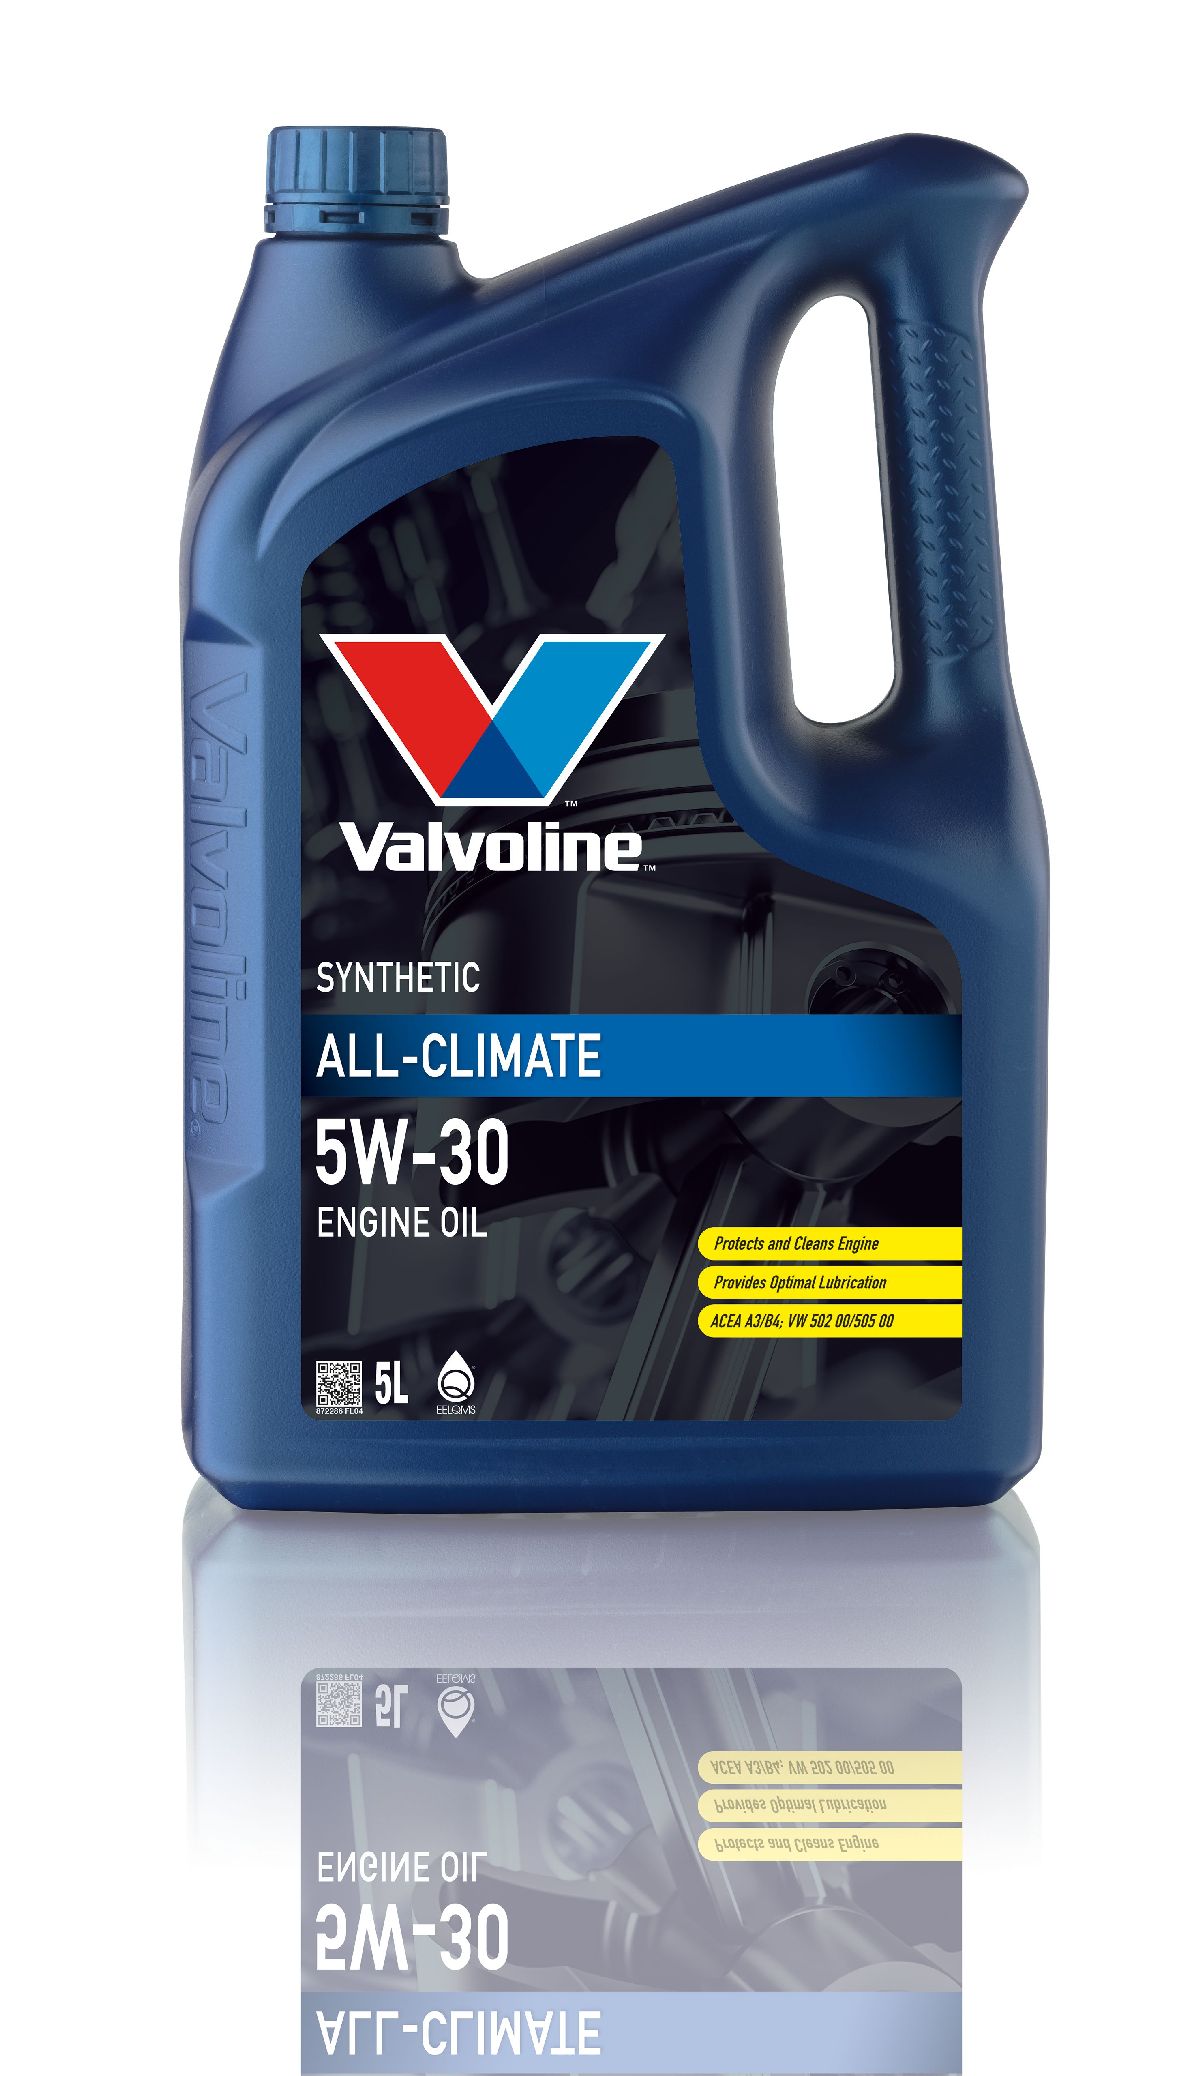 Valvoline All-Climate 5W-30